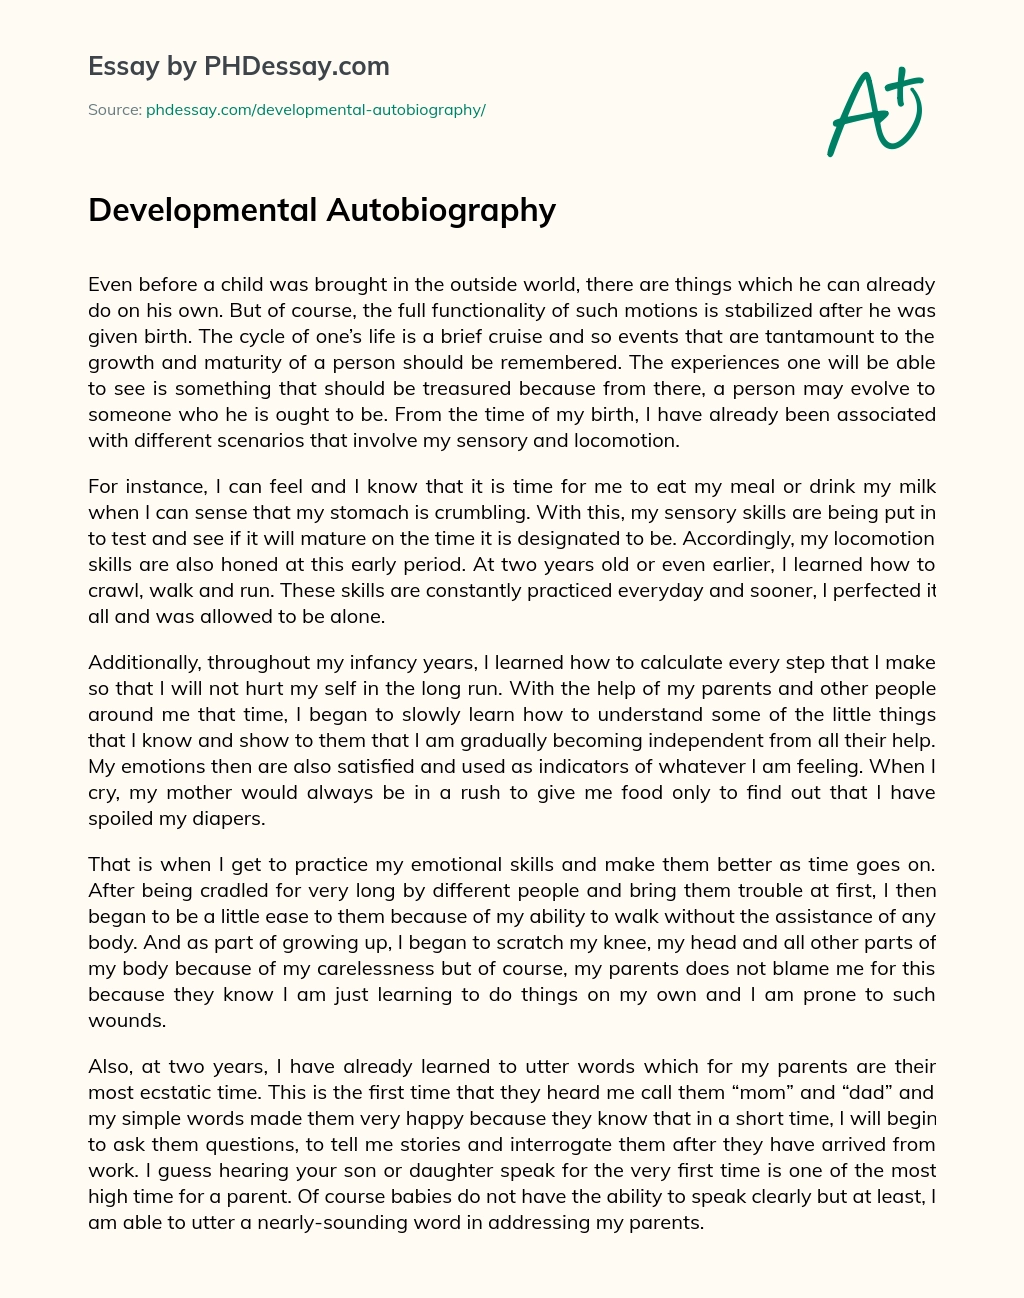 Developmental Autobiography essay